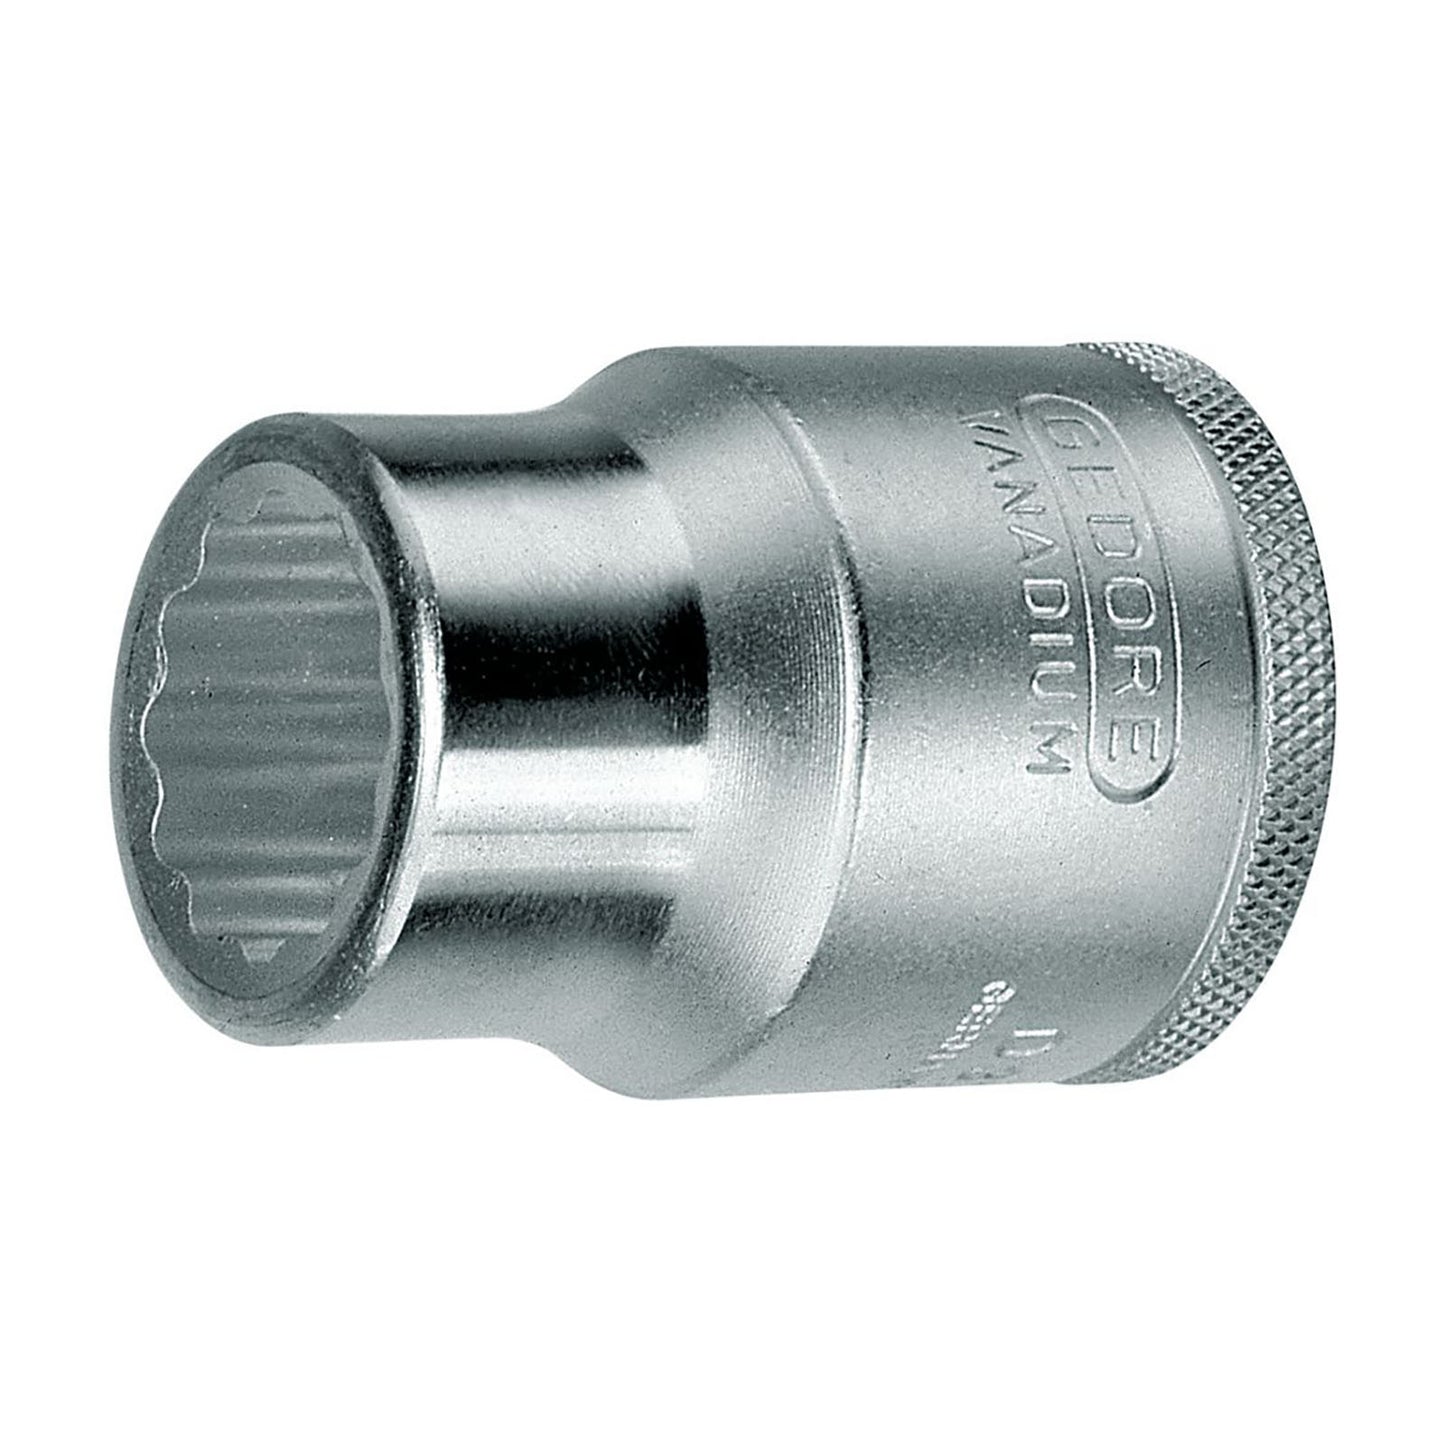 GEDORE D 32 19 - Douille unitaire 3/4", 19 mm (6272160)